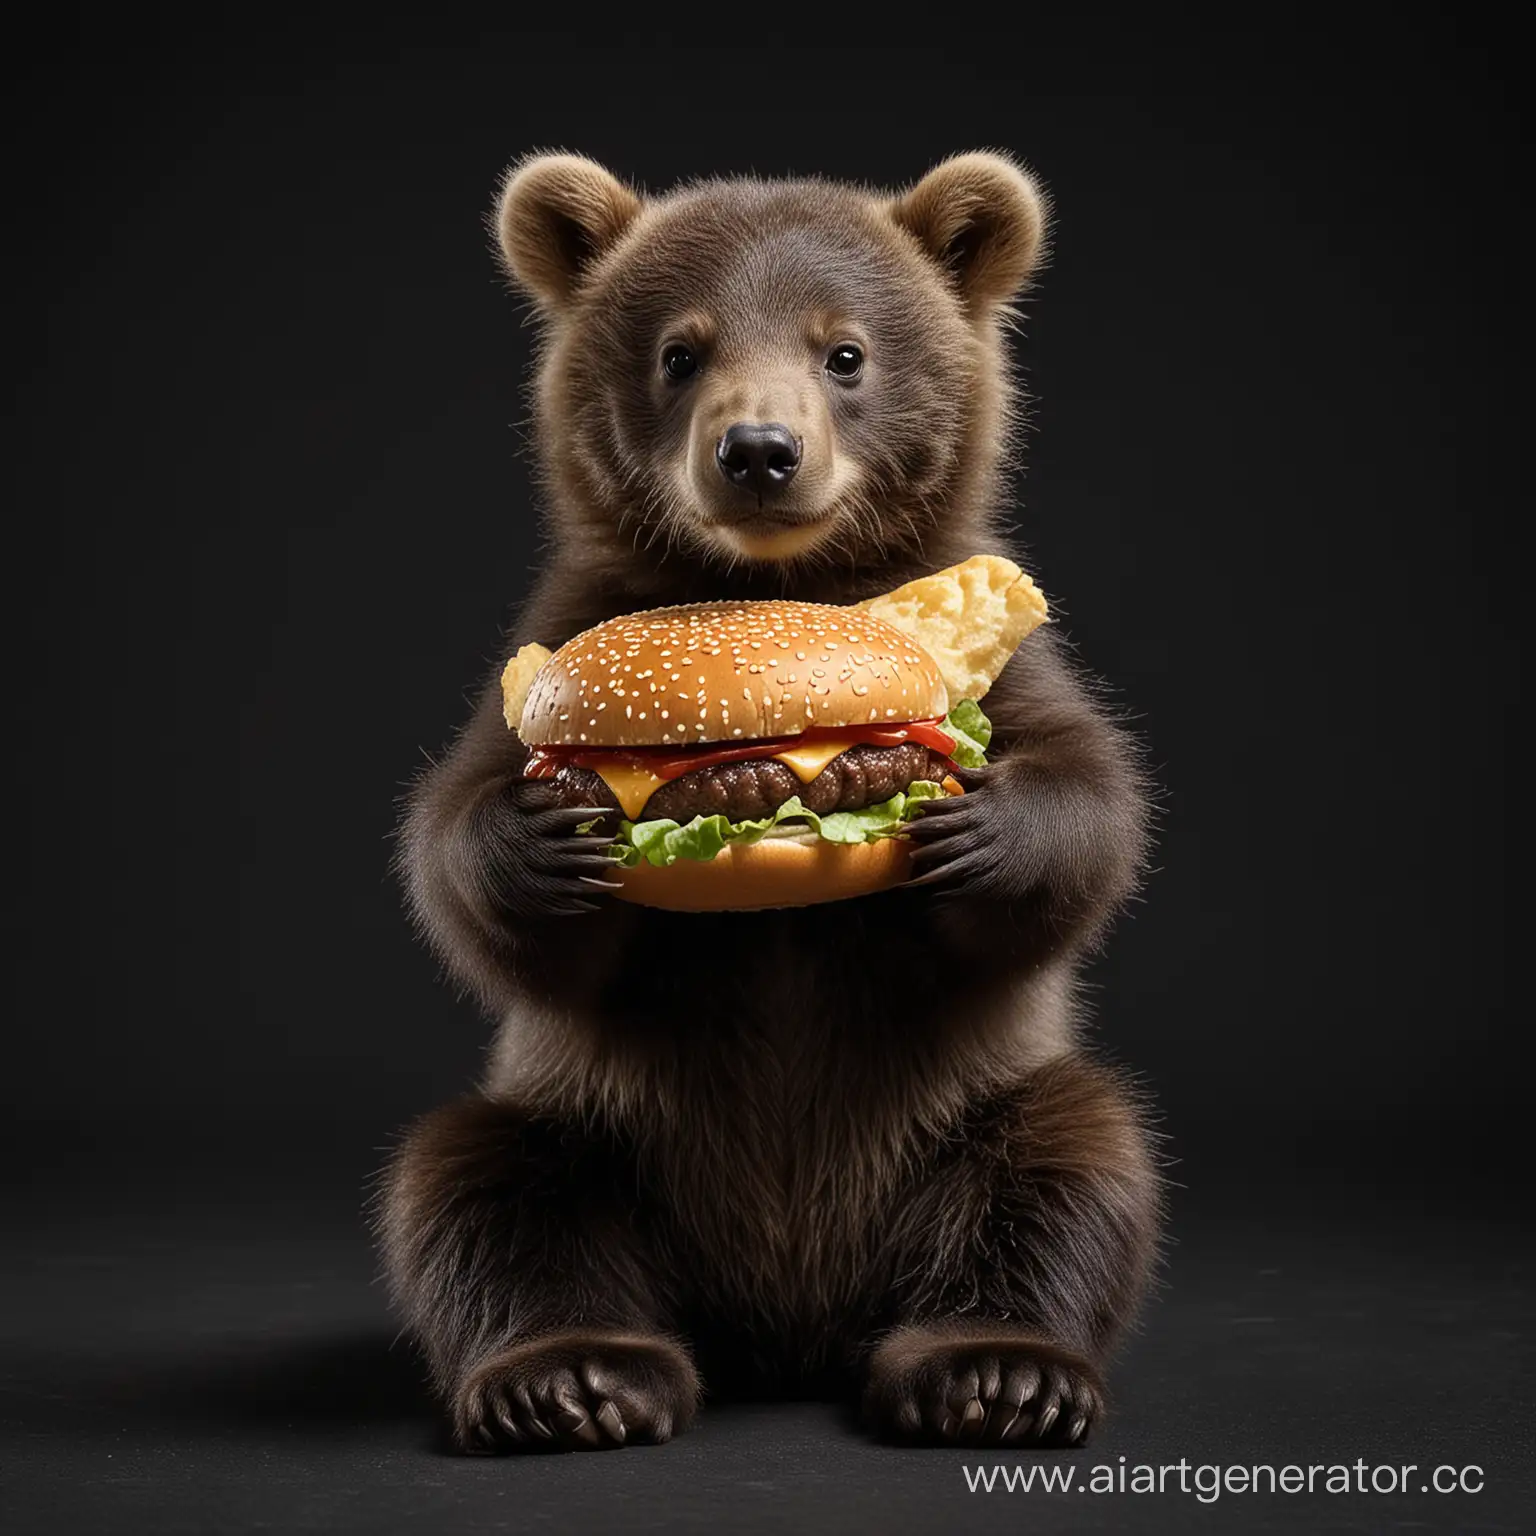 Adorable-Bear-Cub-Enjoying-a-Hamburger-in-the-Dark